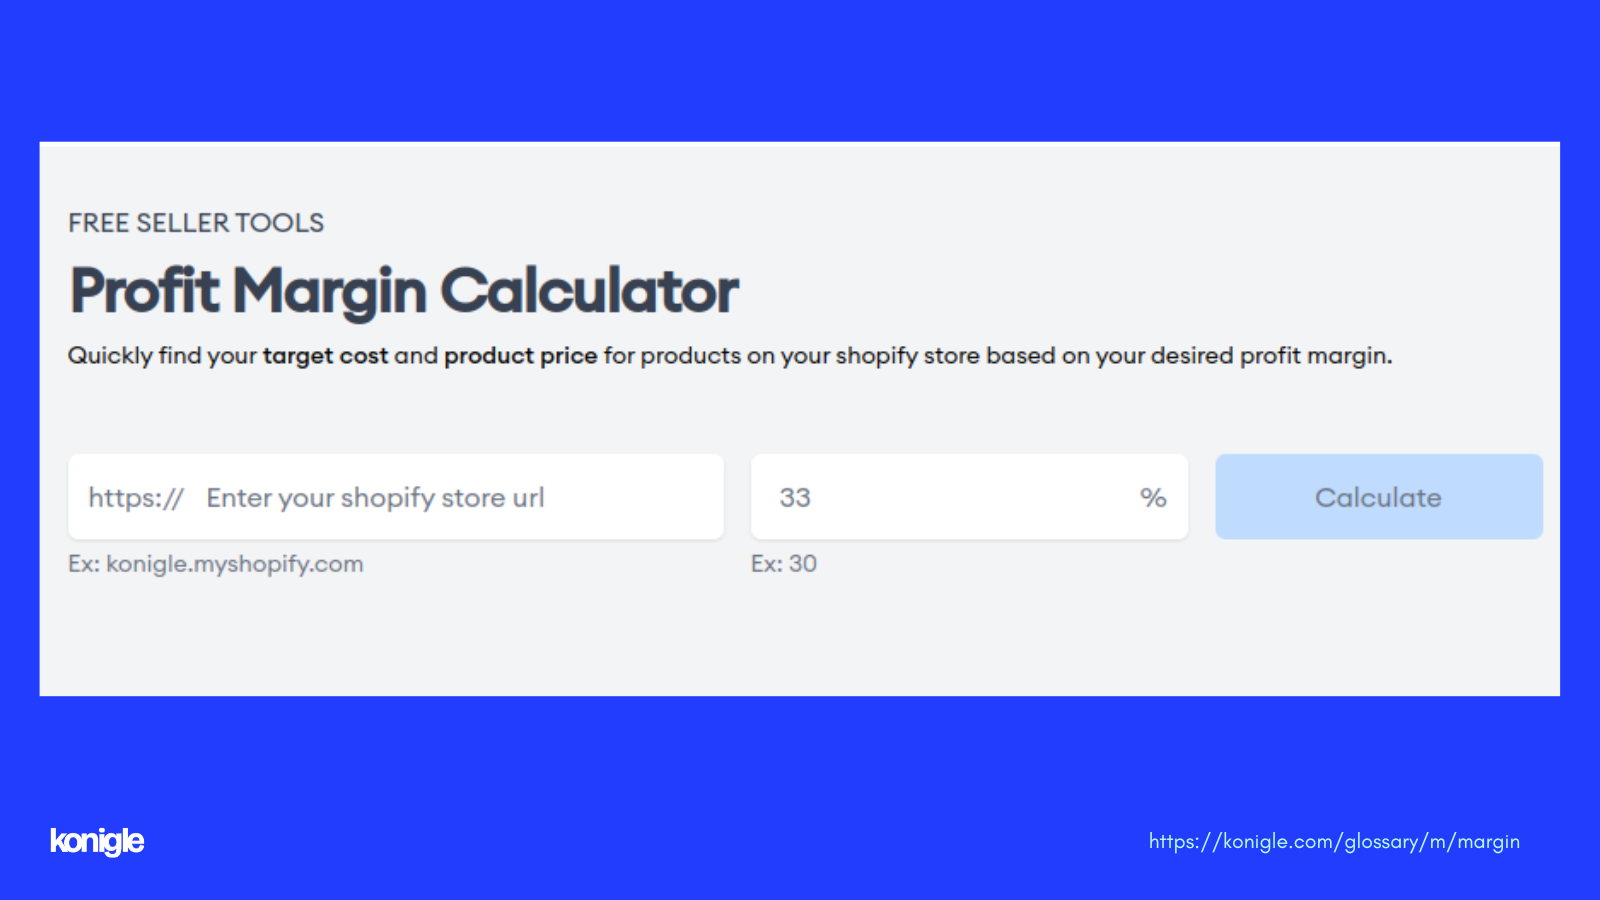 Konigle's profit margin calculator&nbsp;tool